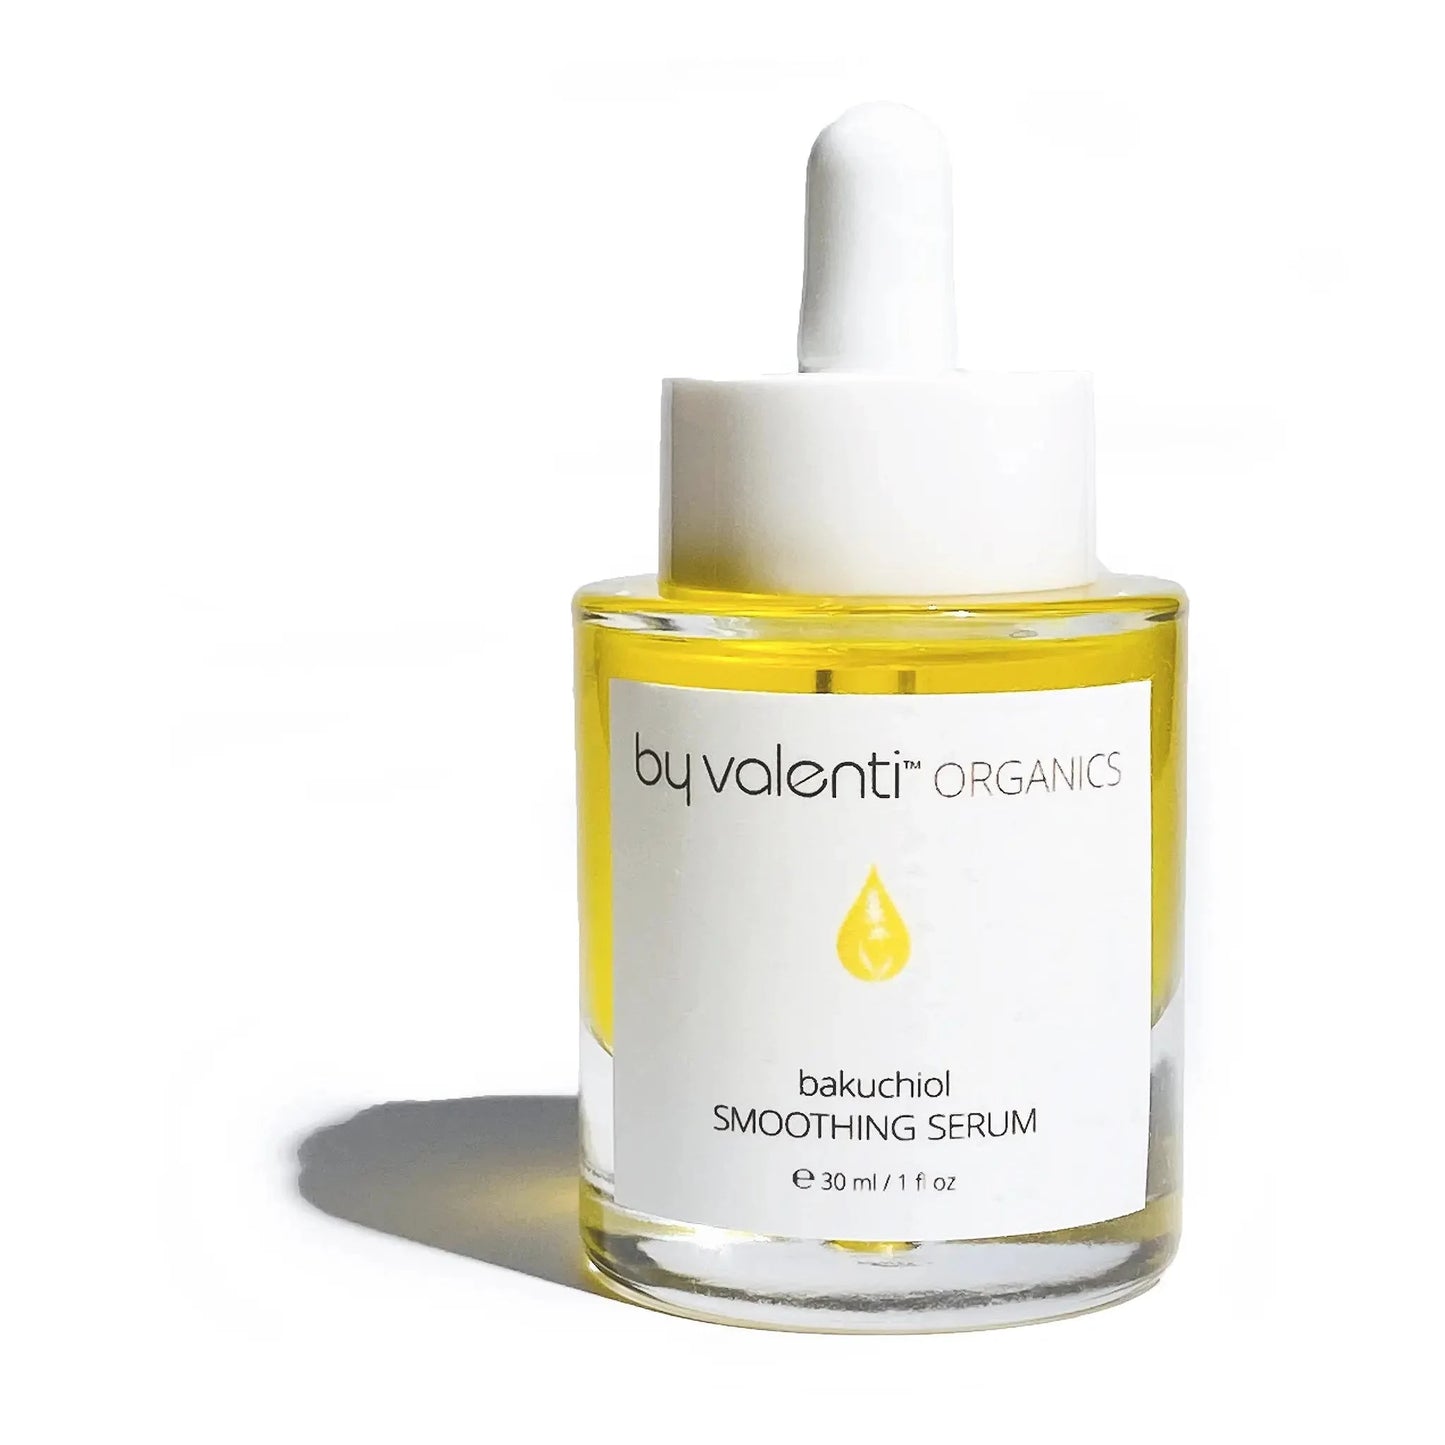 Award-winning Bakuchiol Smoothing Serum By Valenti Organics Natural Skin Care